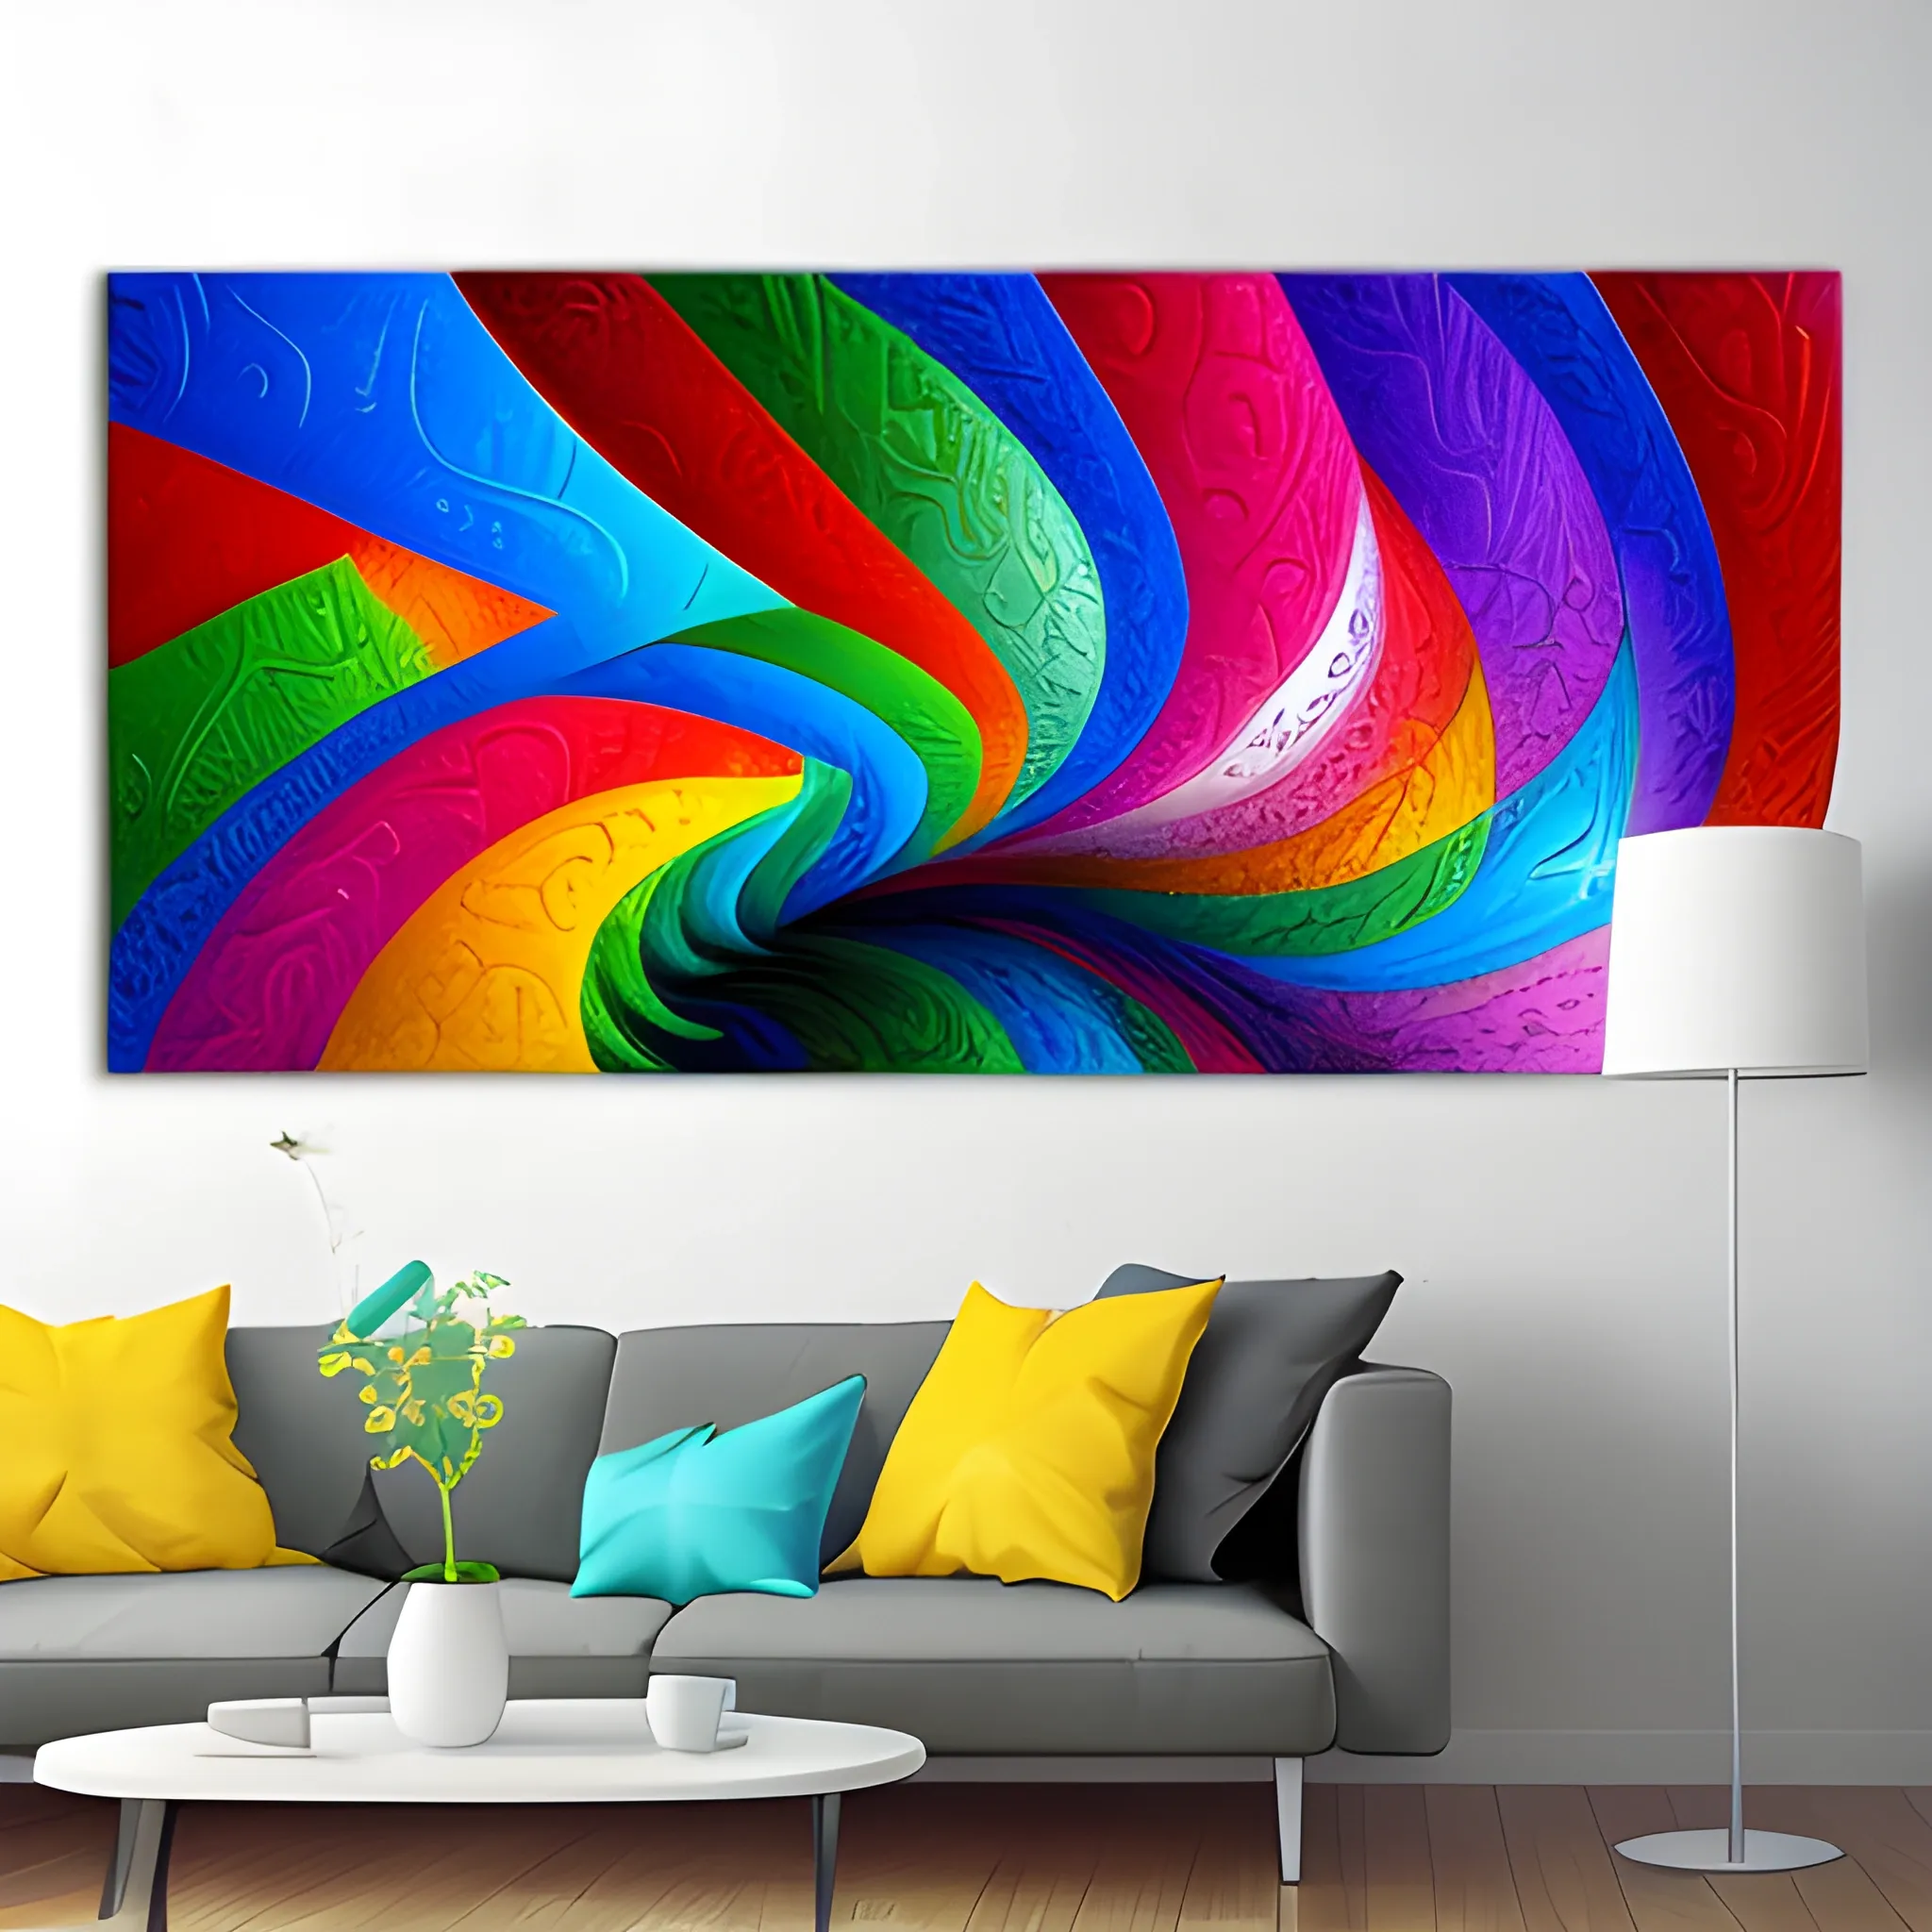 Digital art colorful art wall
